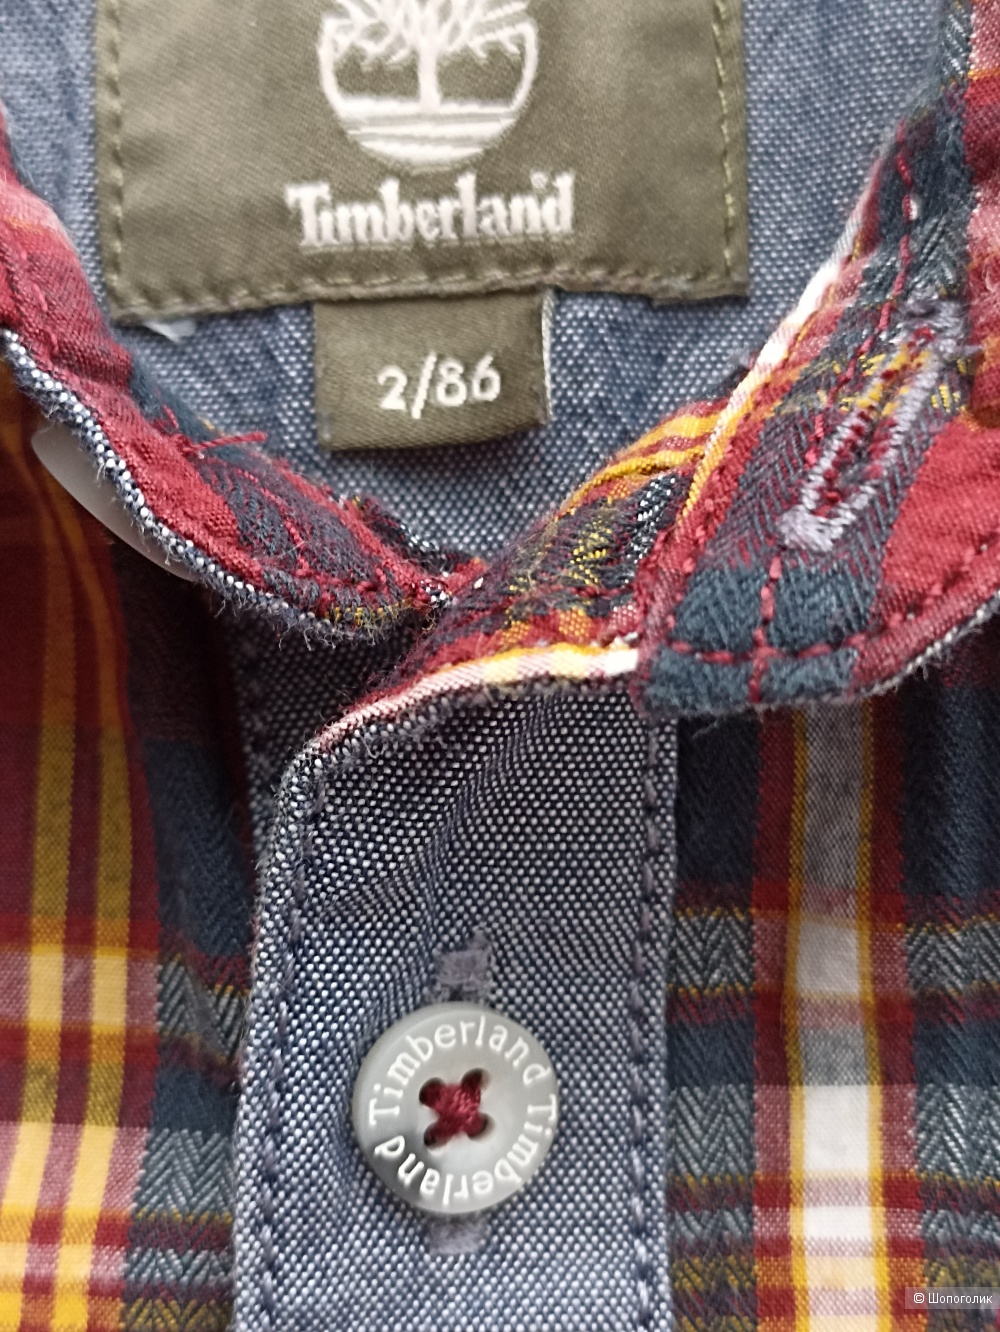 Рубашка Timberland размер 2/86